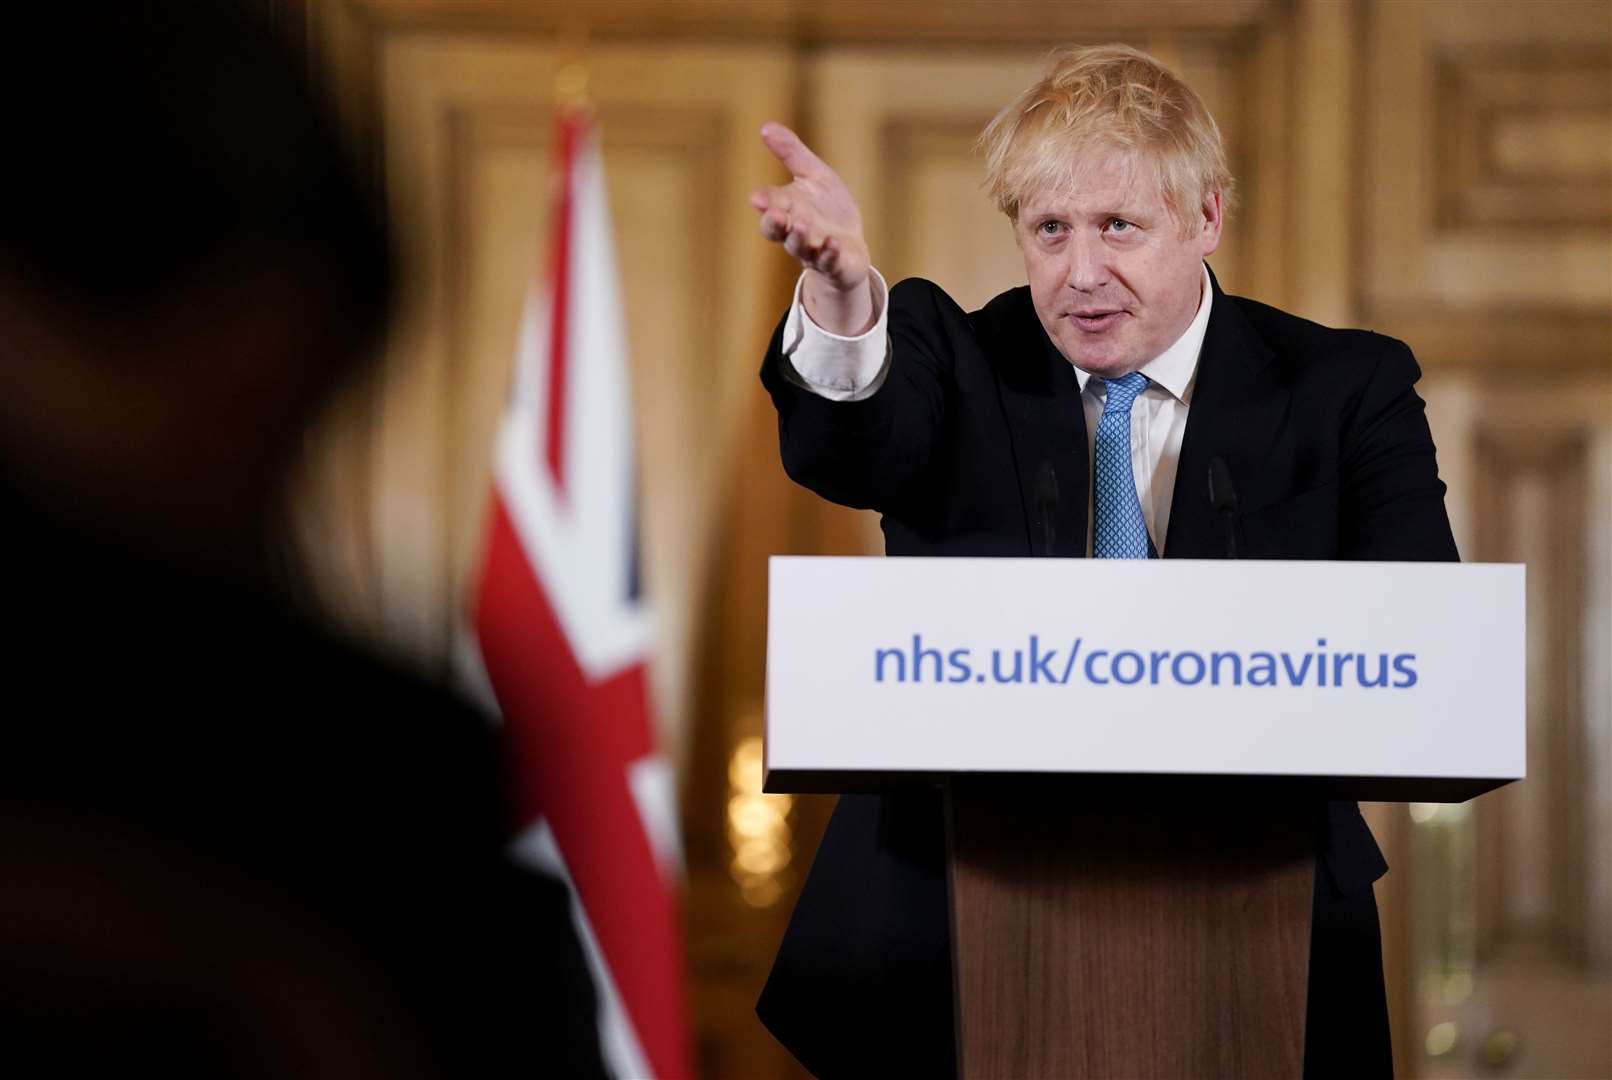 The Prime Minister Boris Johnson made the Tier 4 announcement on Saturday